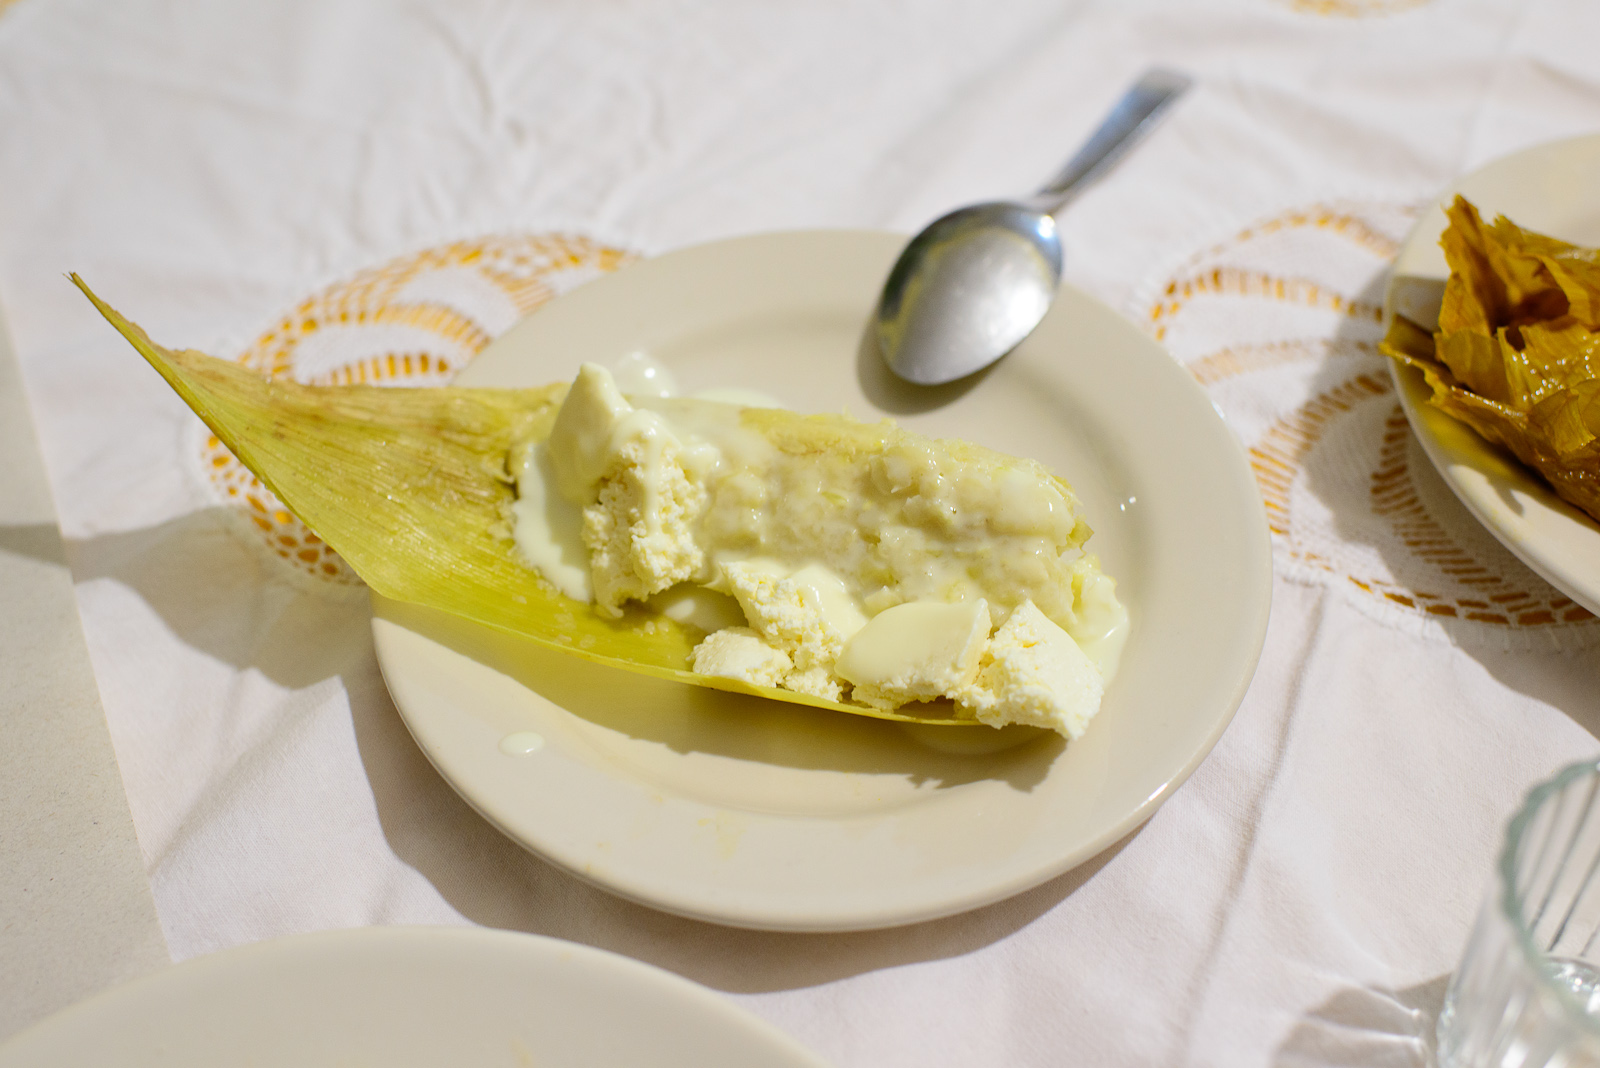 Tamal de elote con crema (Corn tamal, yogurt, fresh cheese)